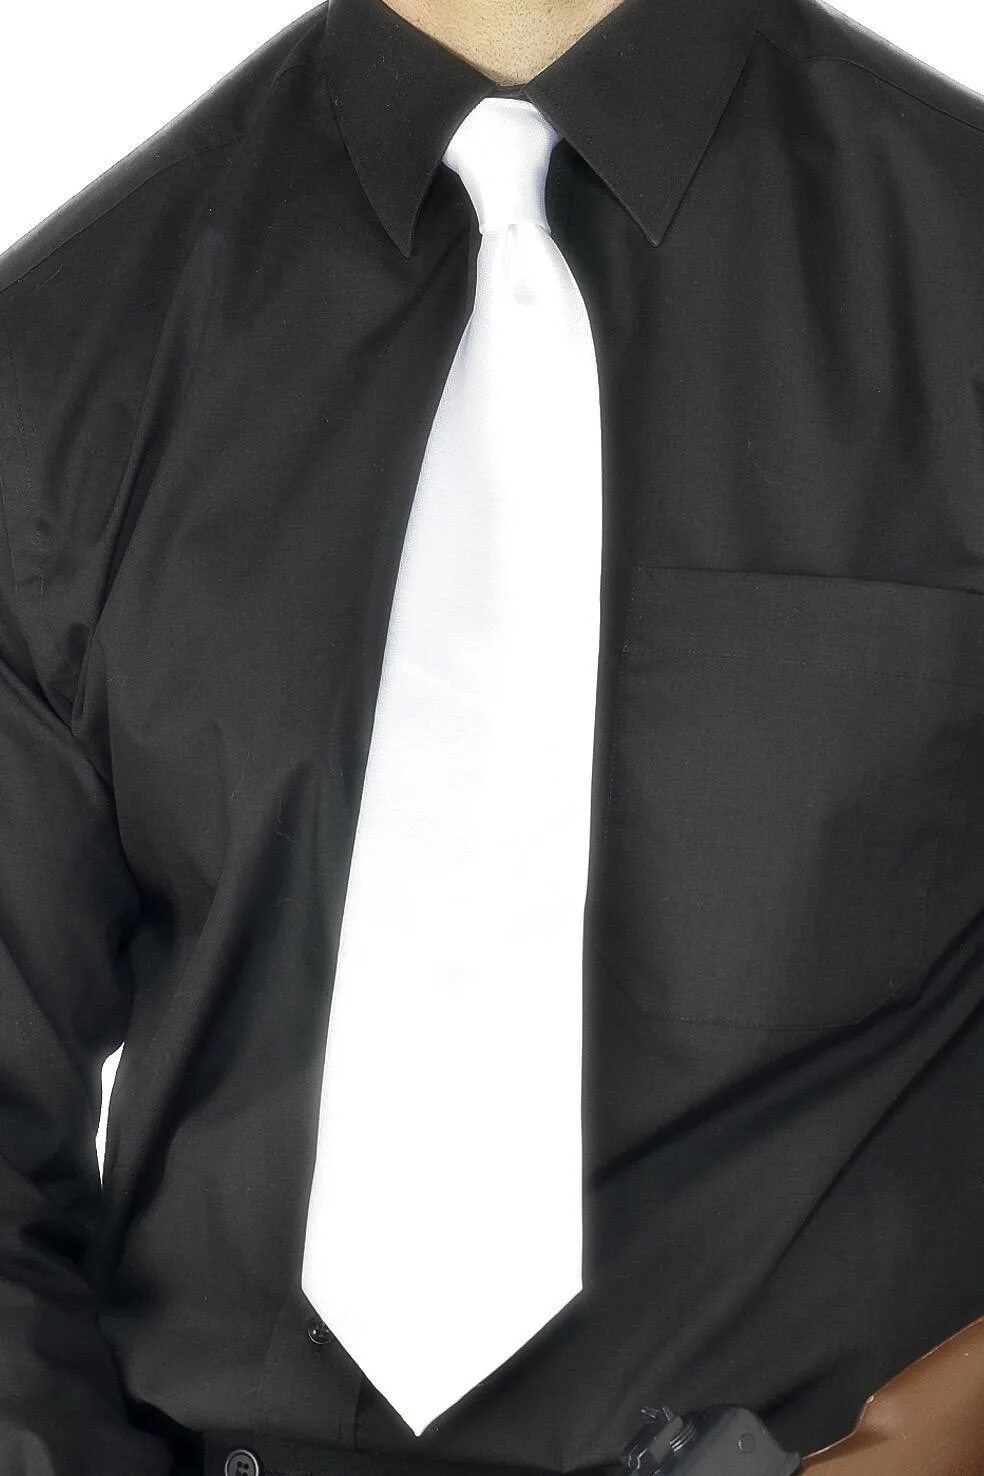 White Tie — «белый галстук». Чёрная рубашка с белым галстуком. Галстук к черной рубашке. Черная рубашка с черным галстуком. Белый галстук у черного кота 7 букв